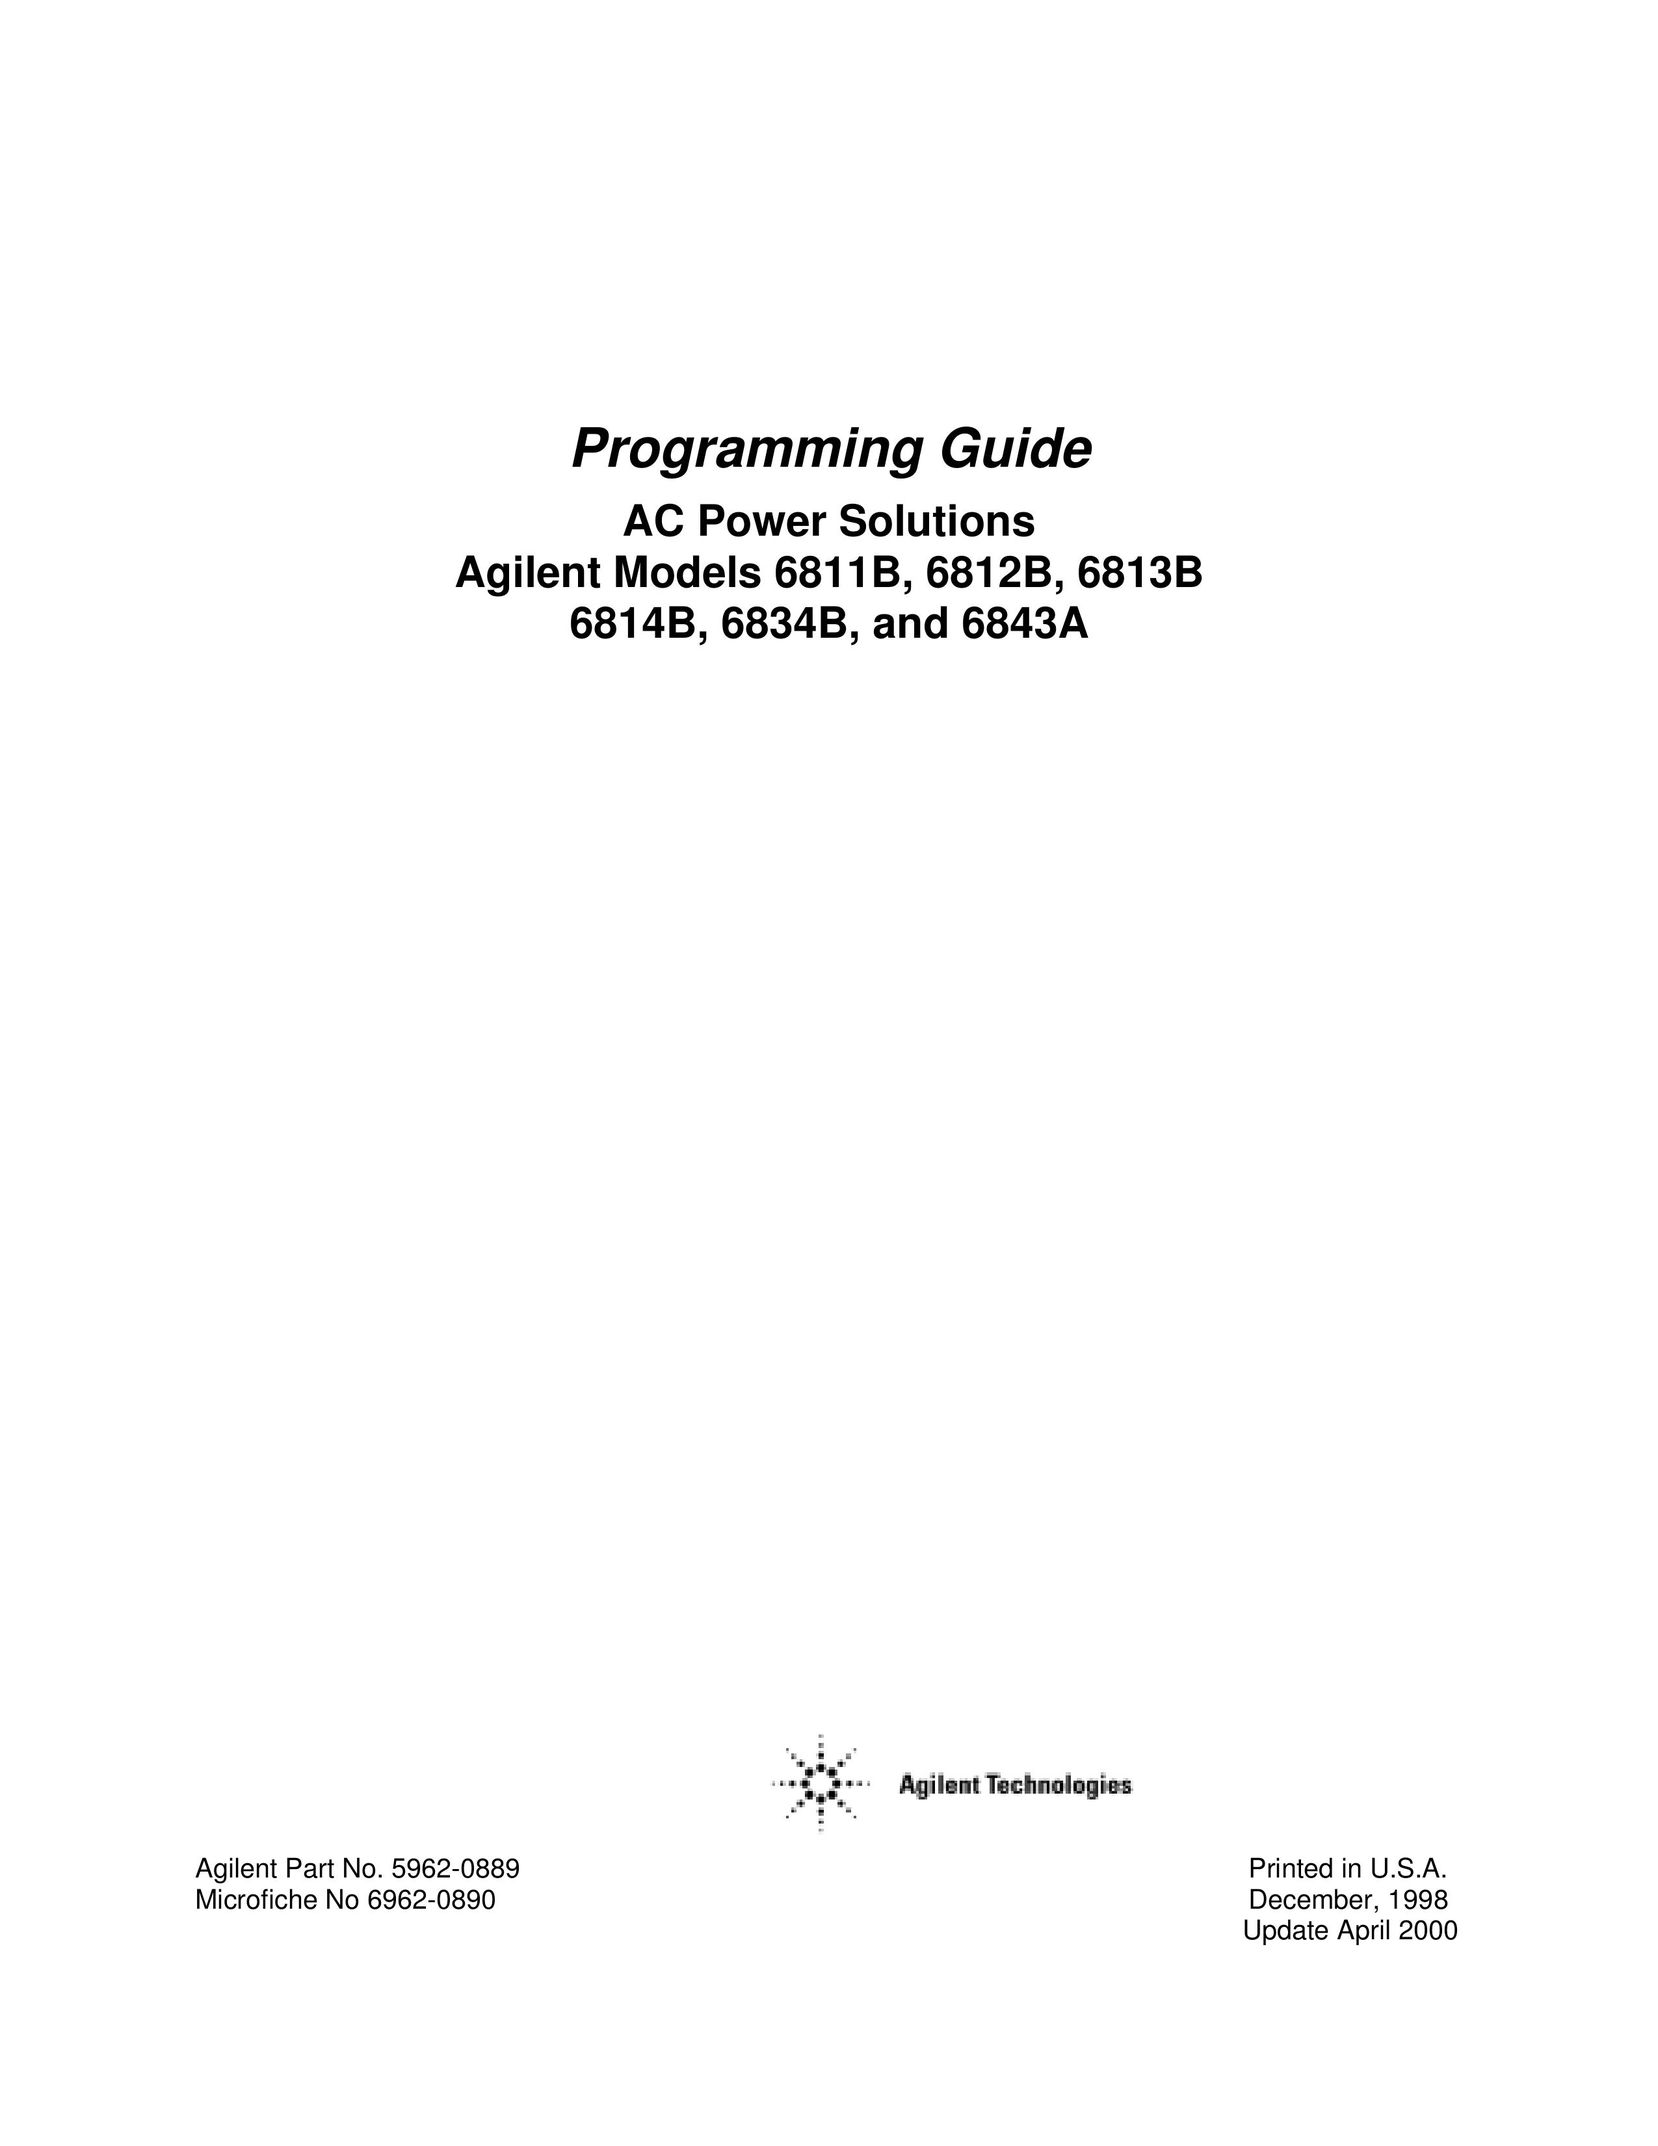 Agilent Technologies 6812B Welding System User Manual